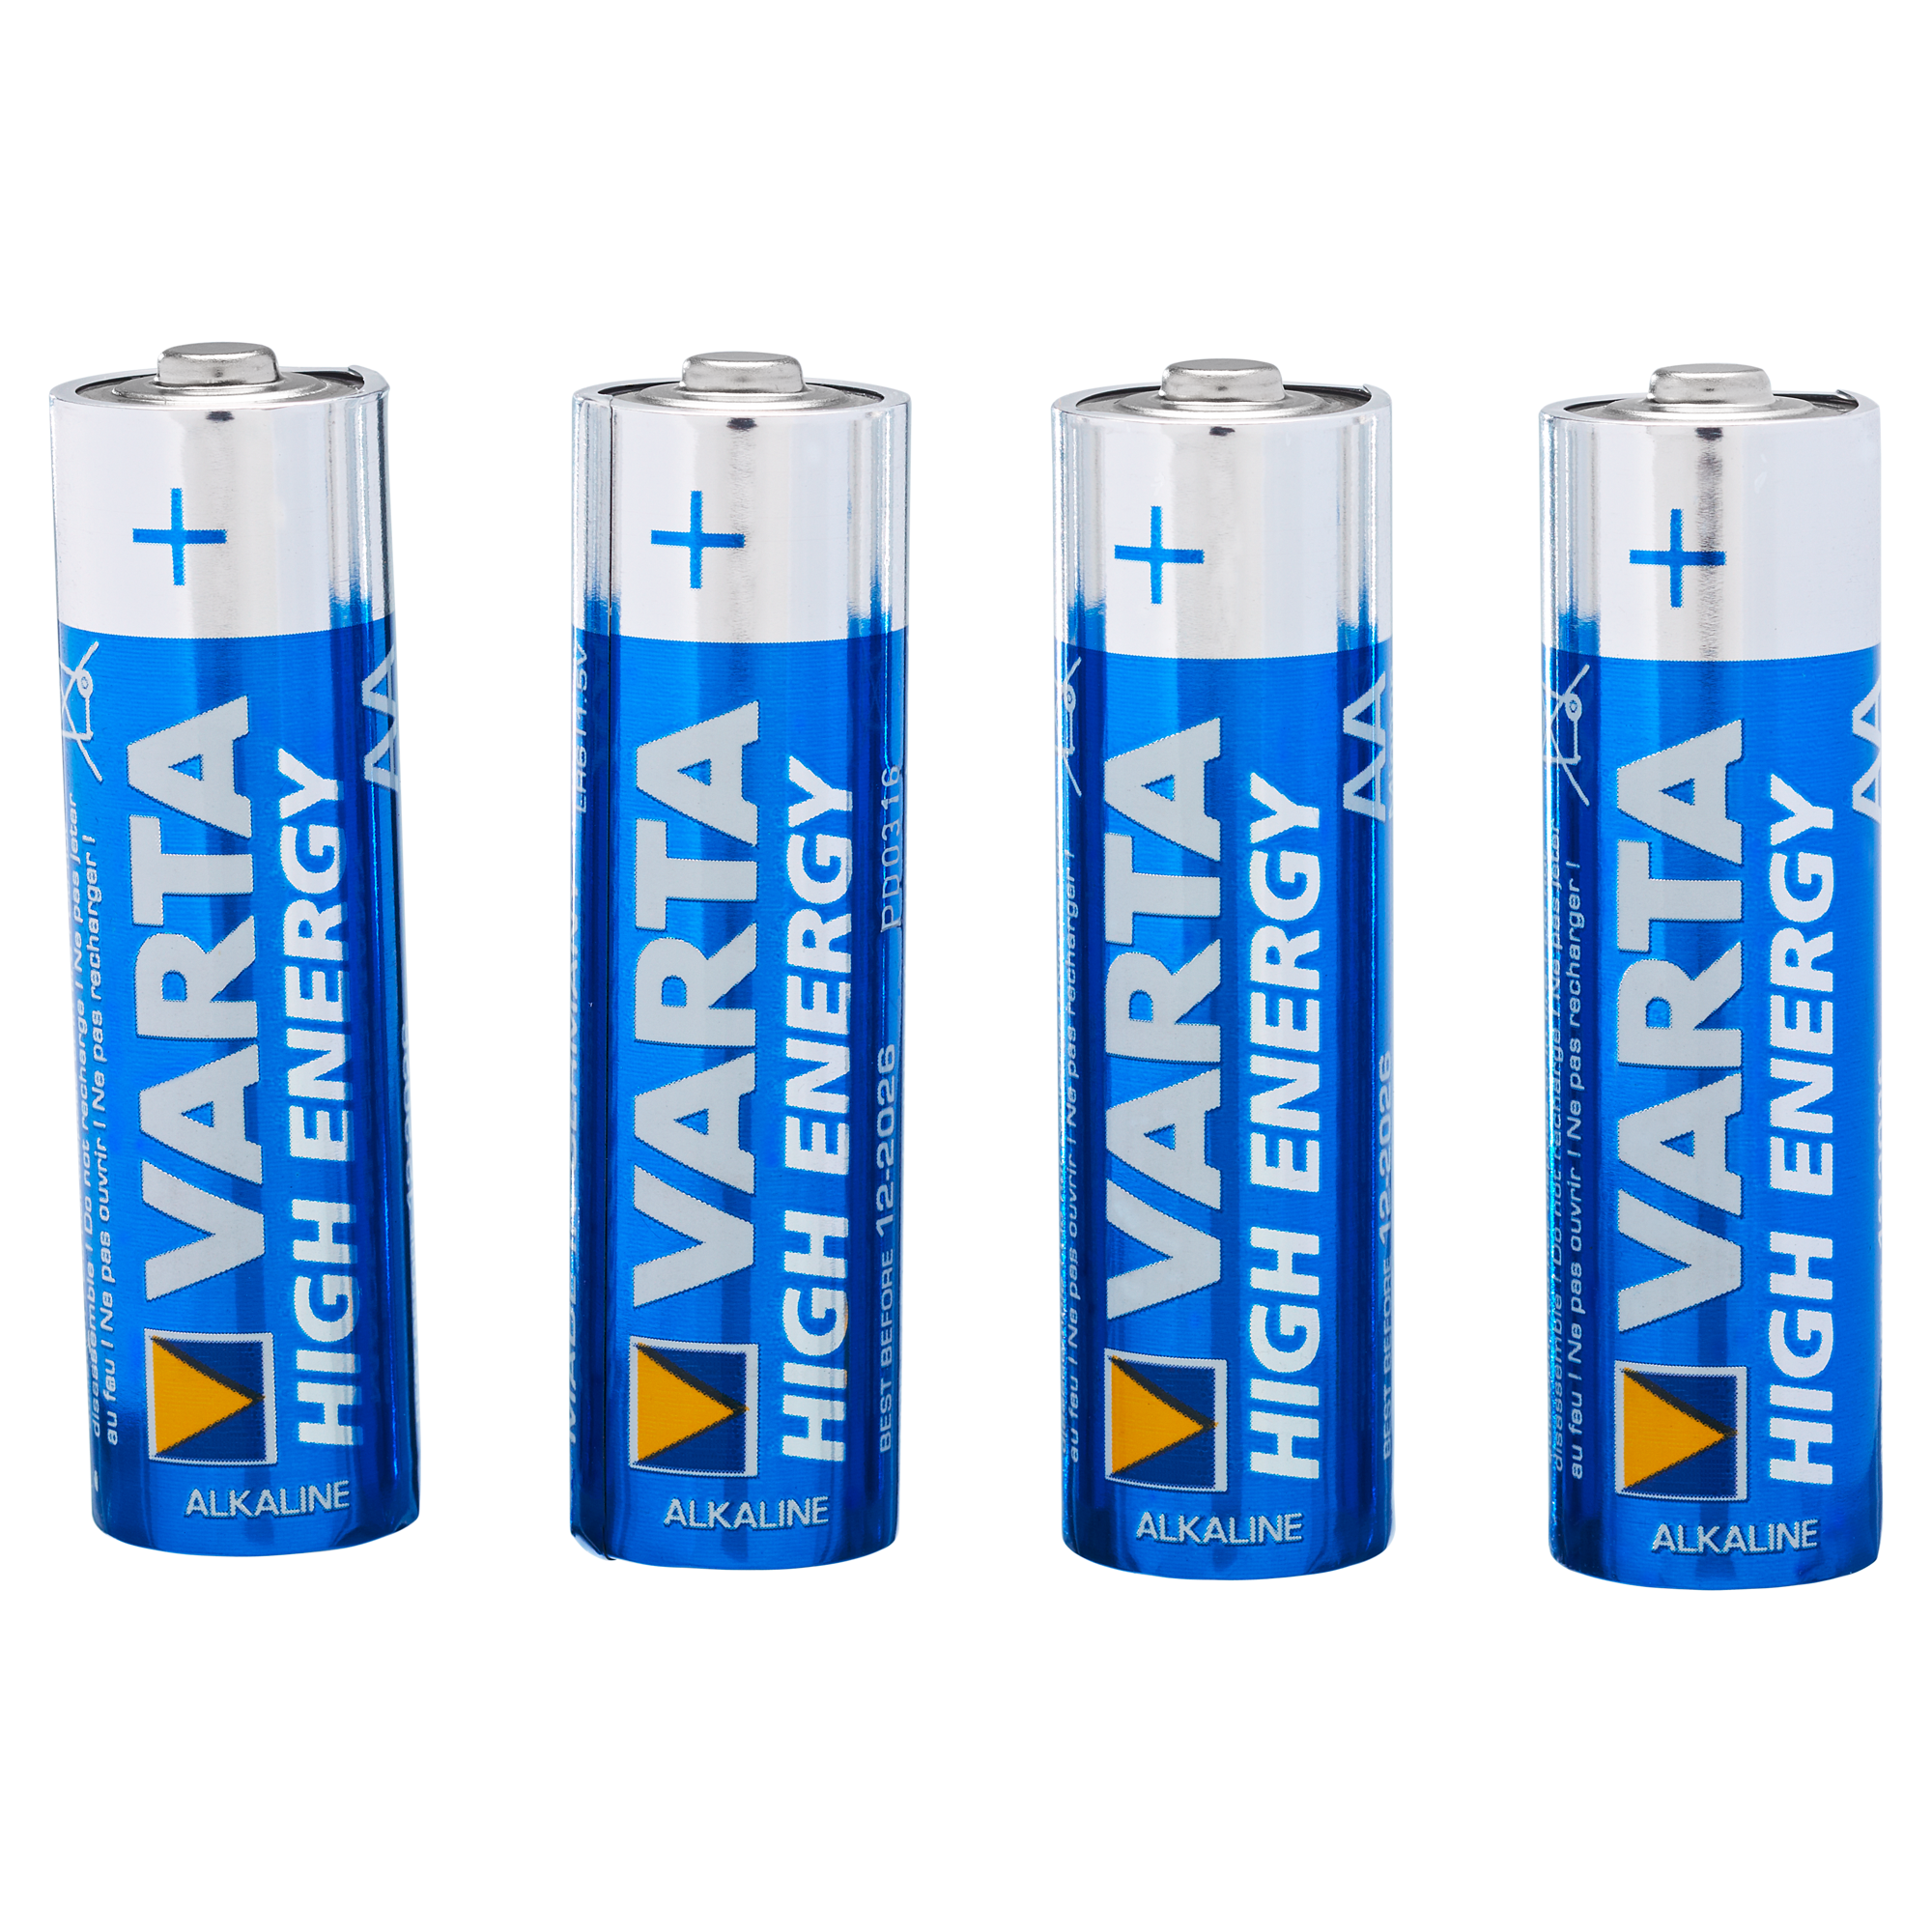 Batterien "High Energy" AA Alkaline 4 Stück + product picture